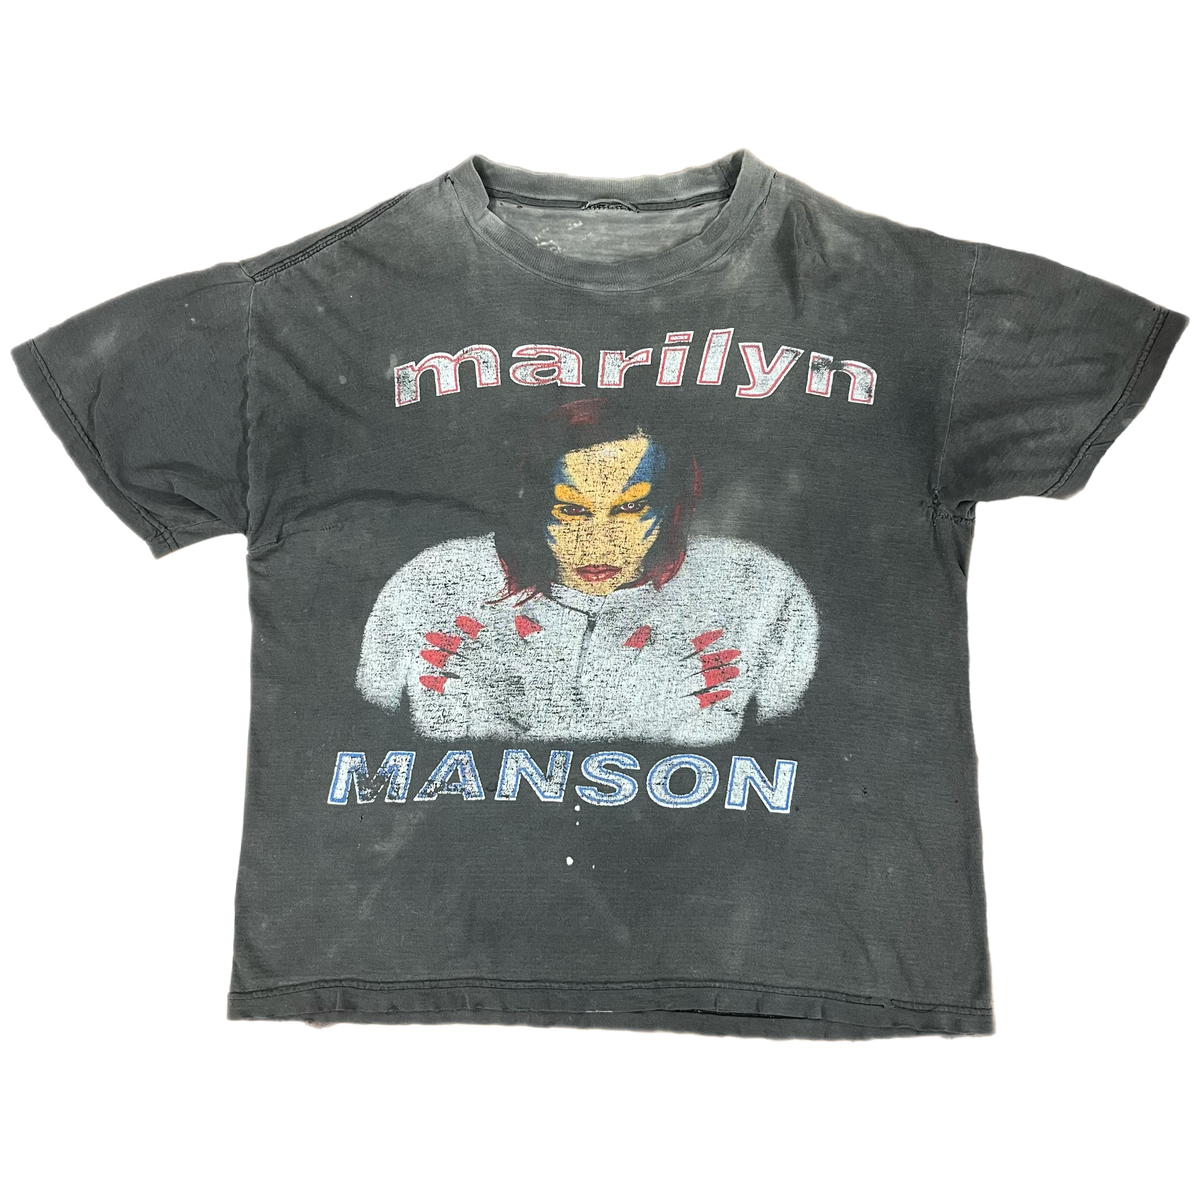 Vintage Marilyn Manson &quot;Mechanical Animals&quot; World Tour T-Shirt